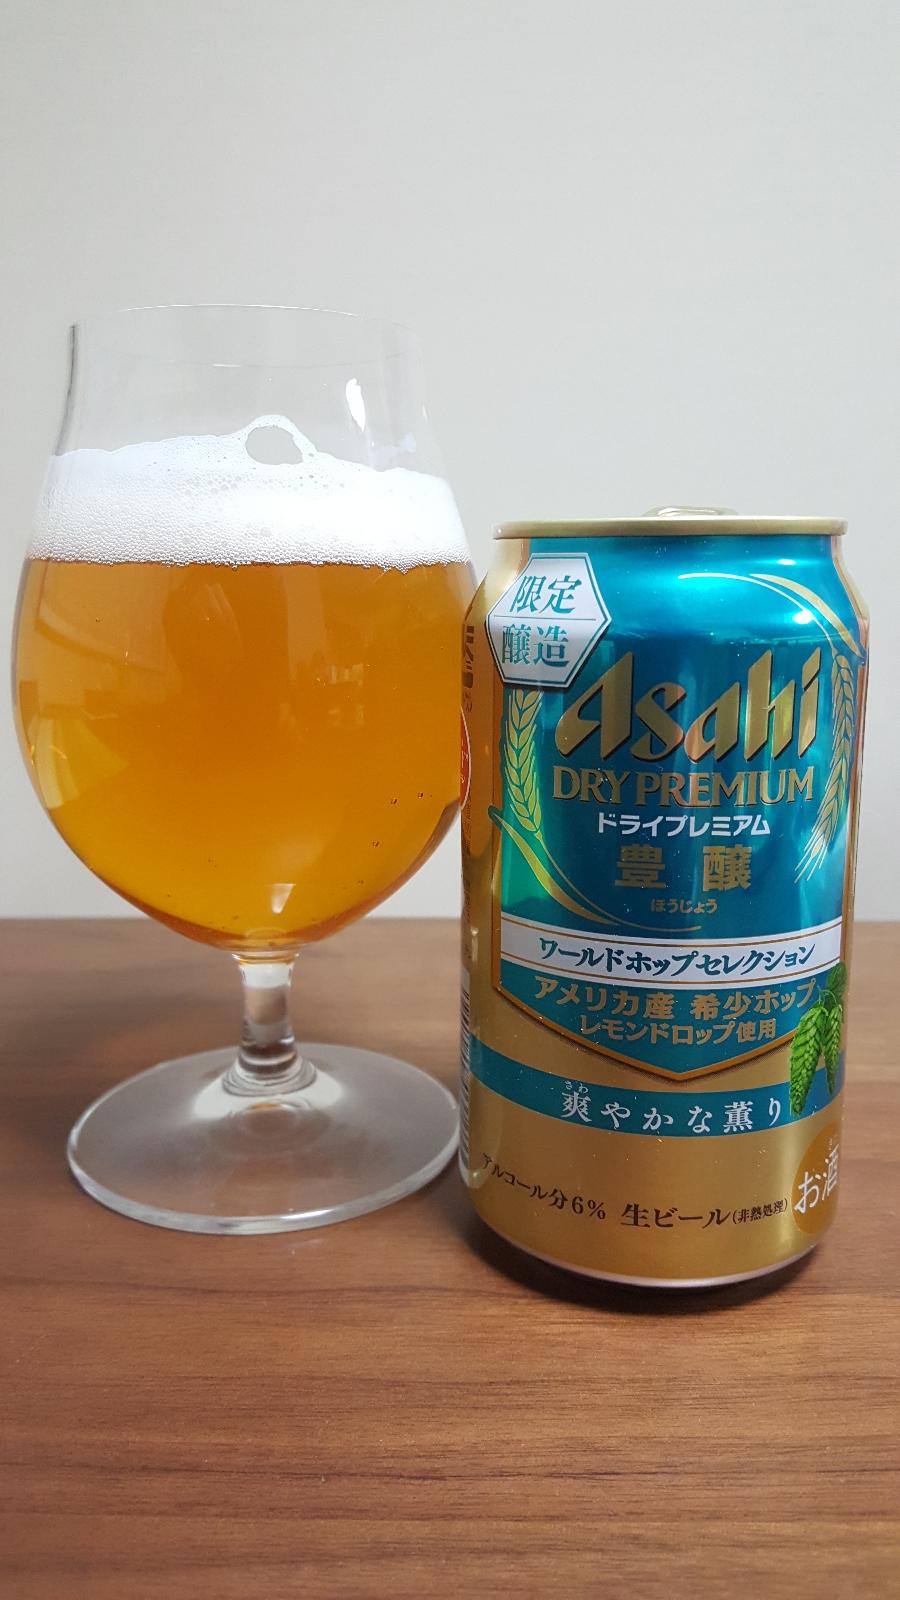 Asahi Dry Premium Houjou World Hop Selection Lemon Drop